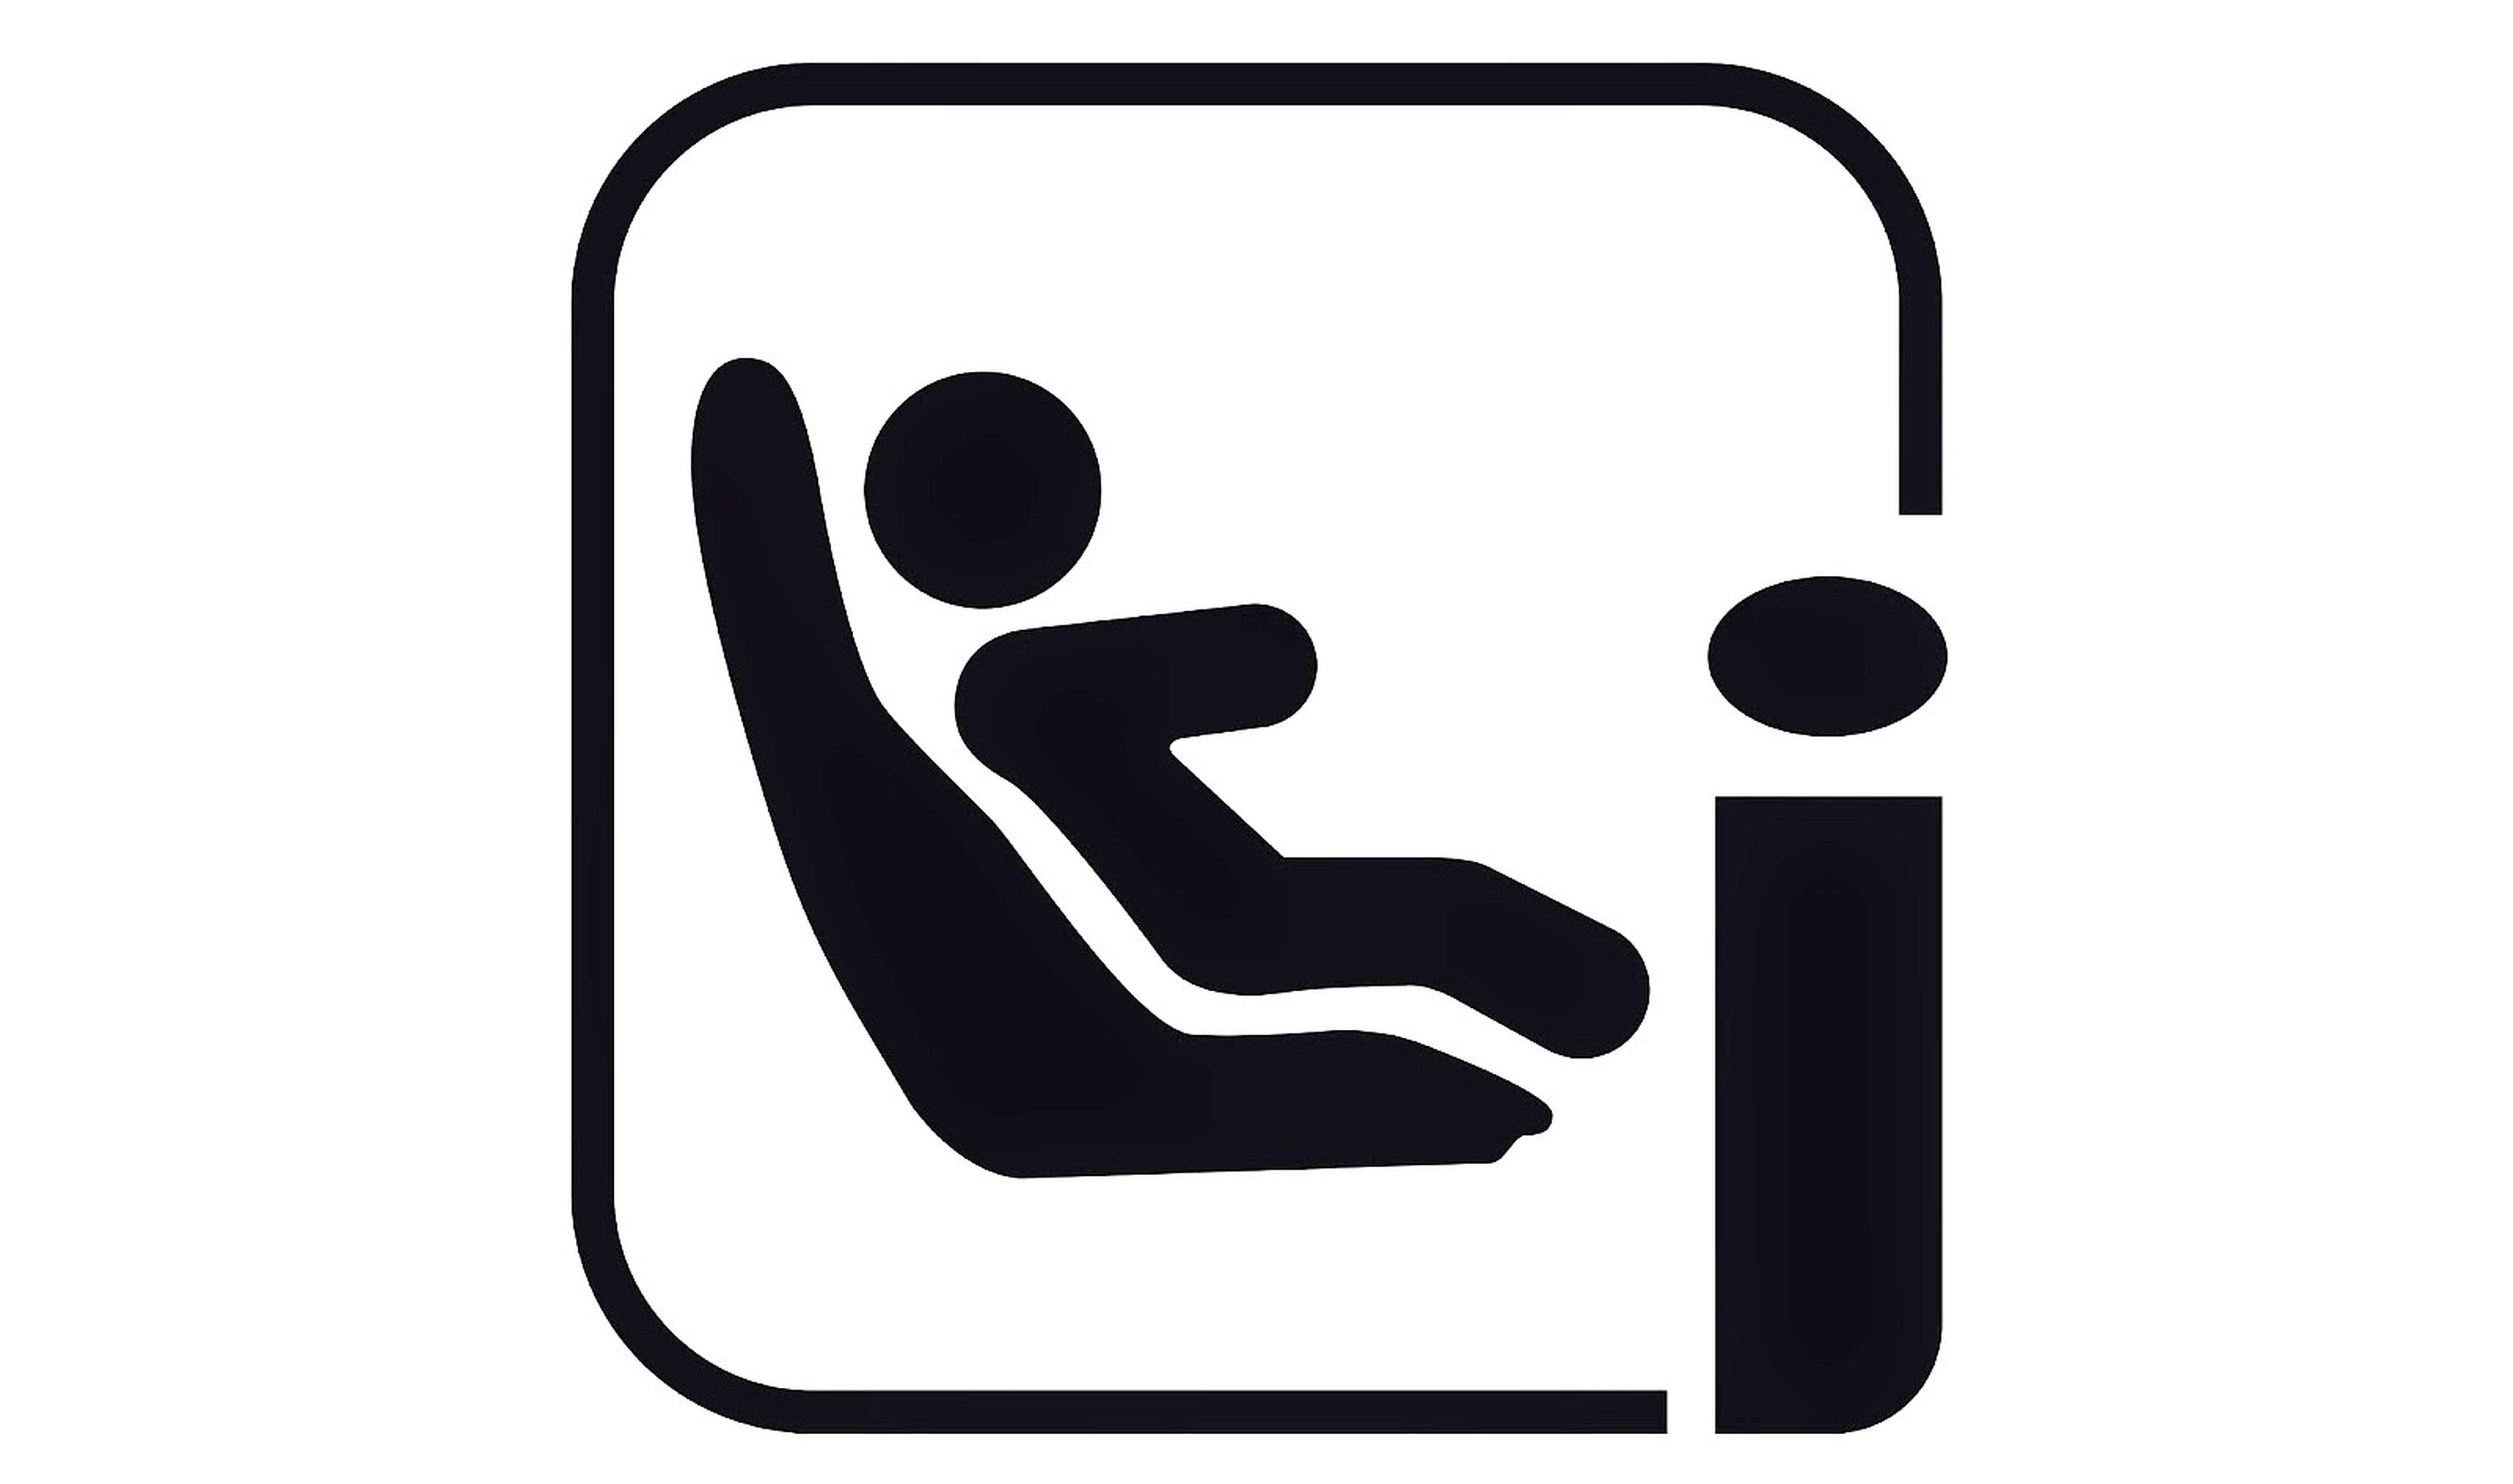 Comprar un silla i-Size: tres consejos fundamentales